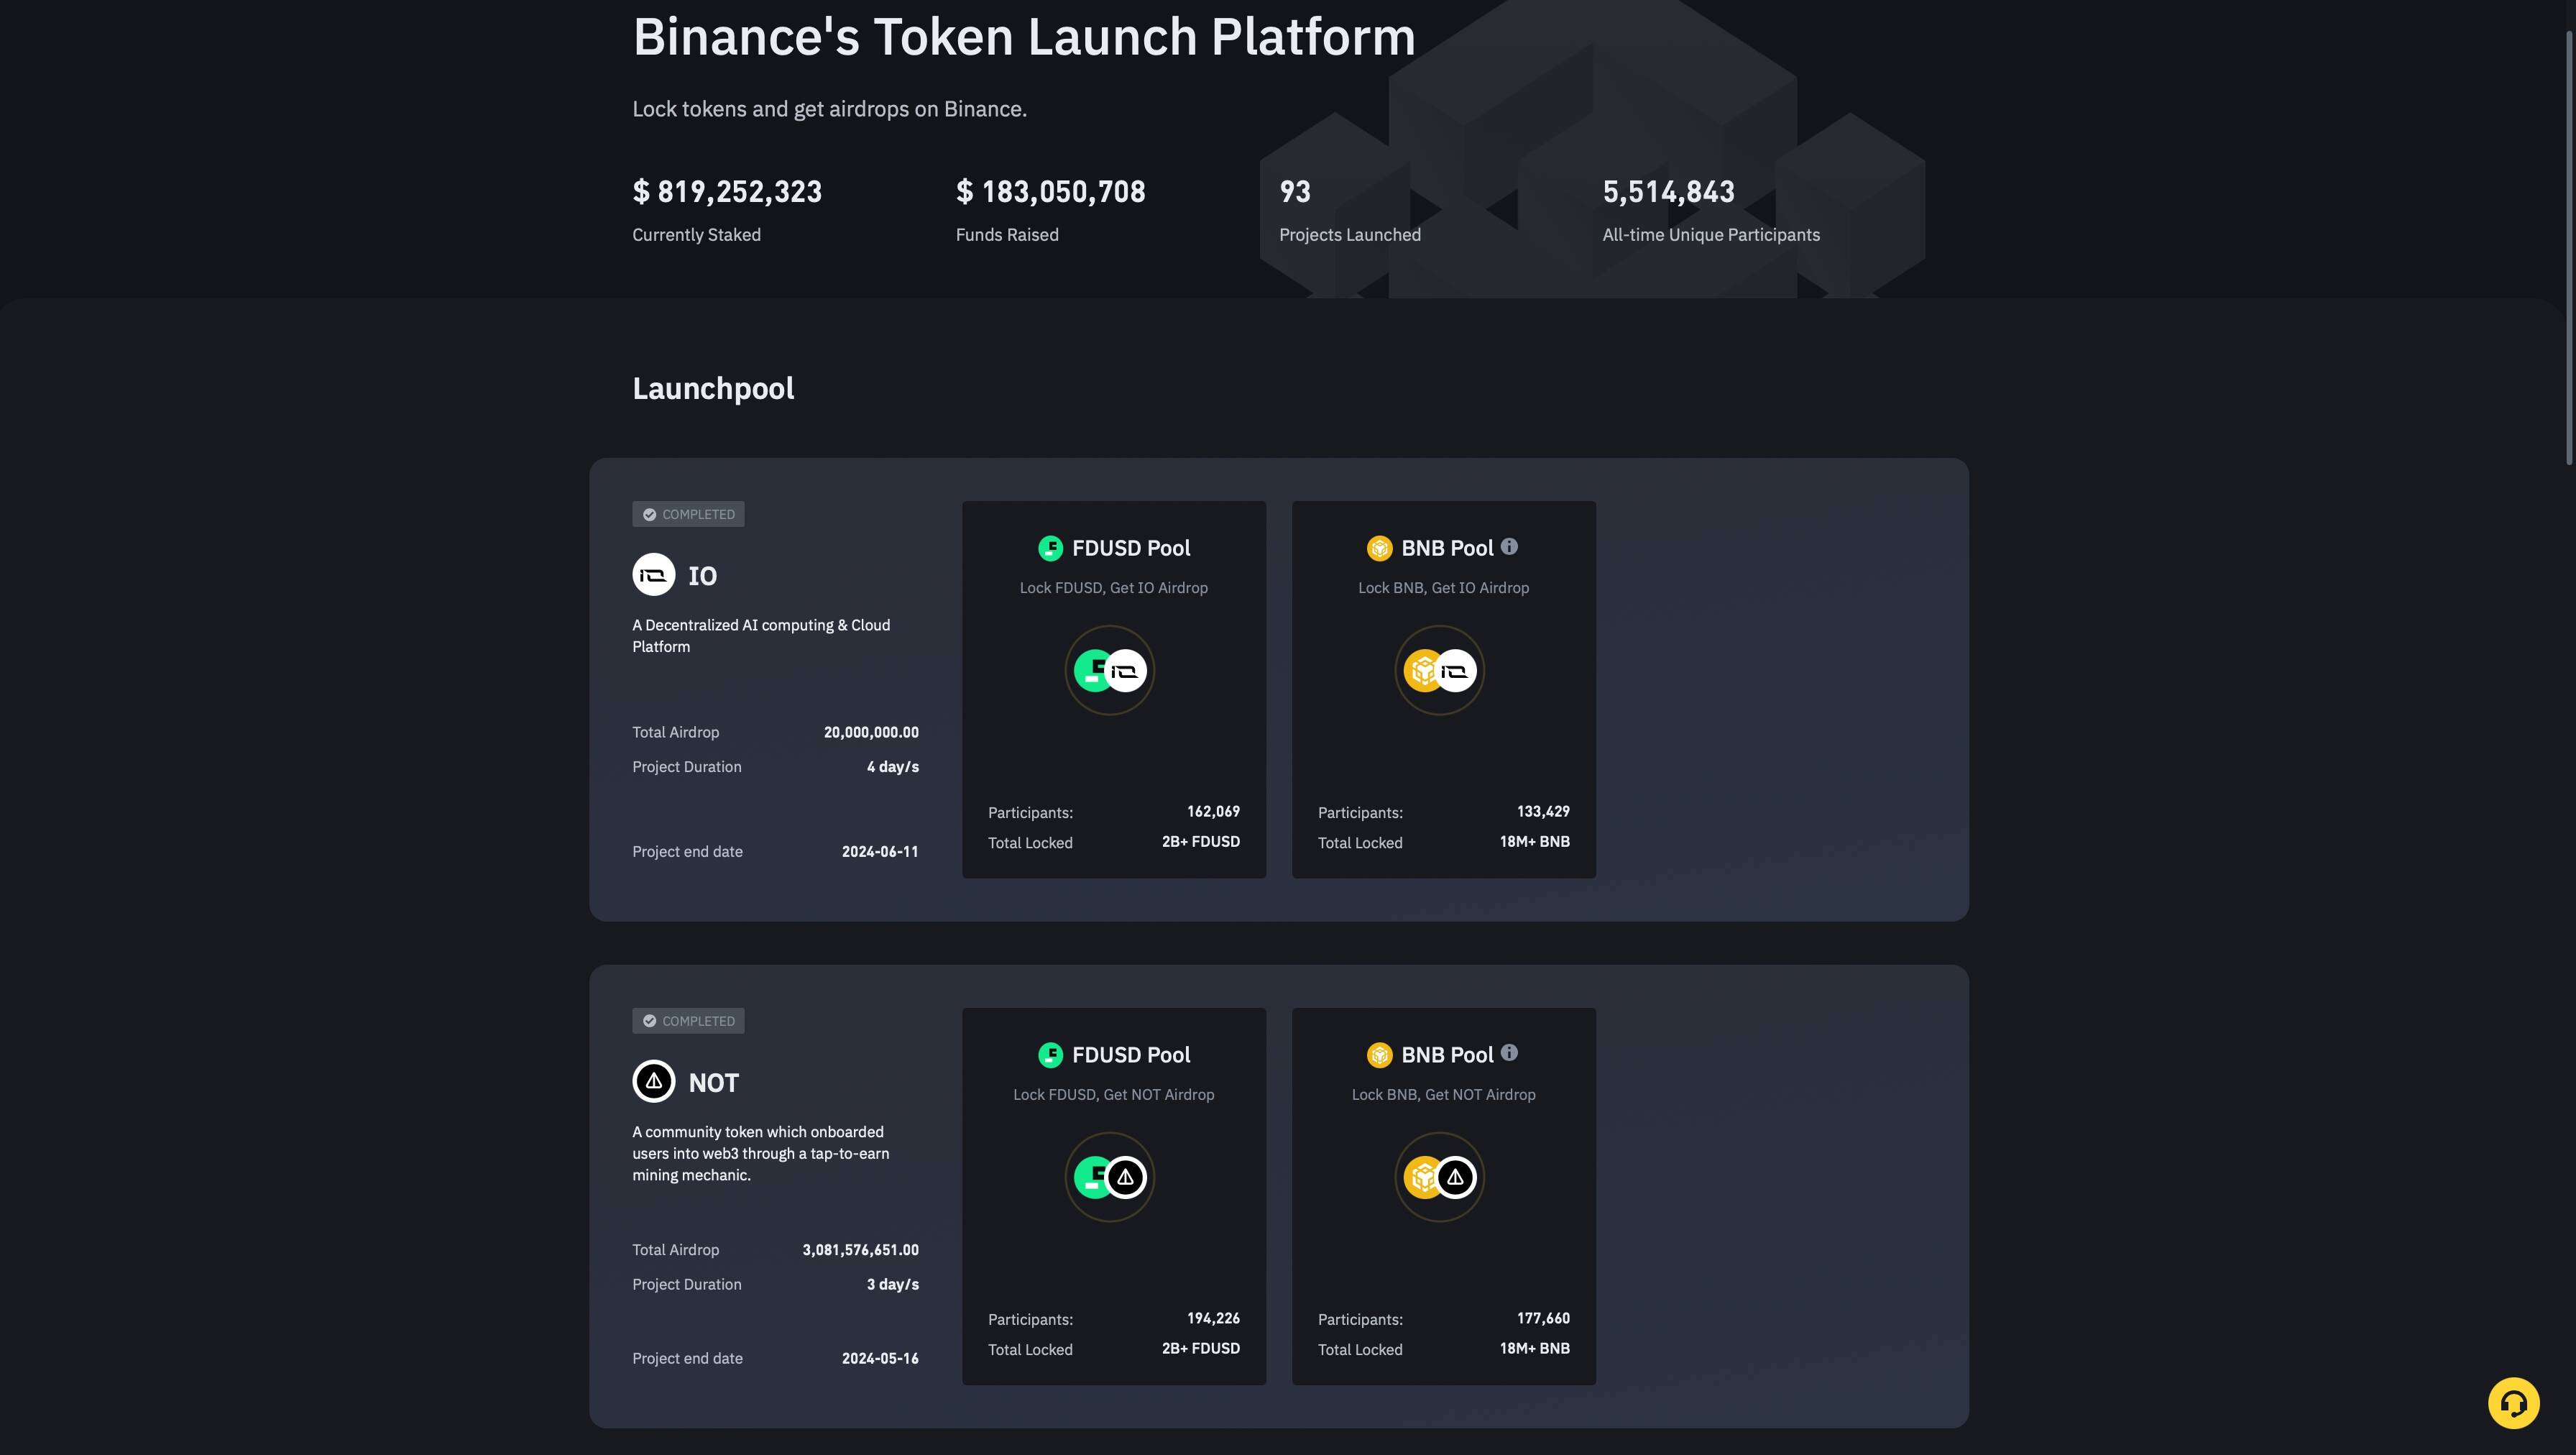 Binance’s Token Launch Platform